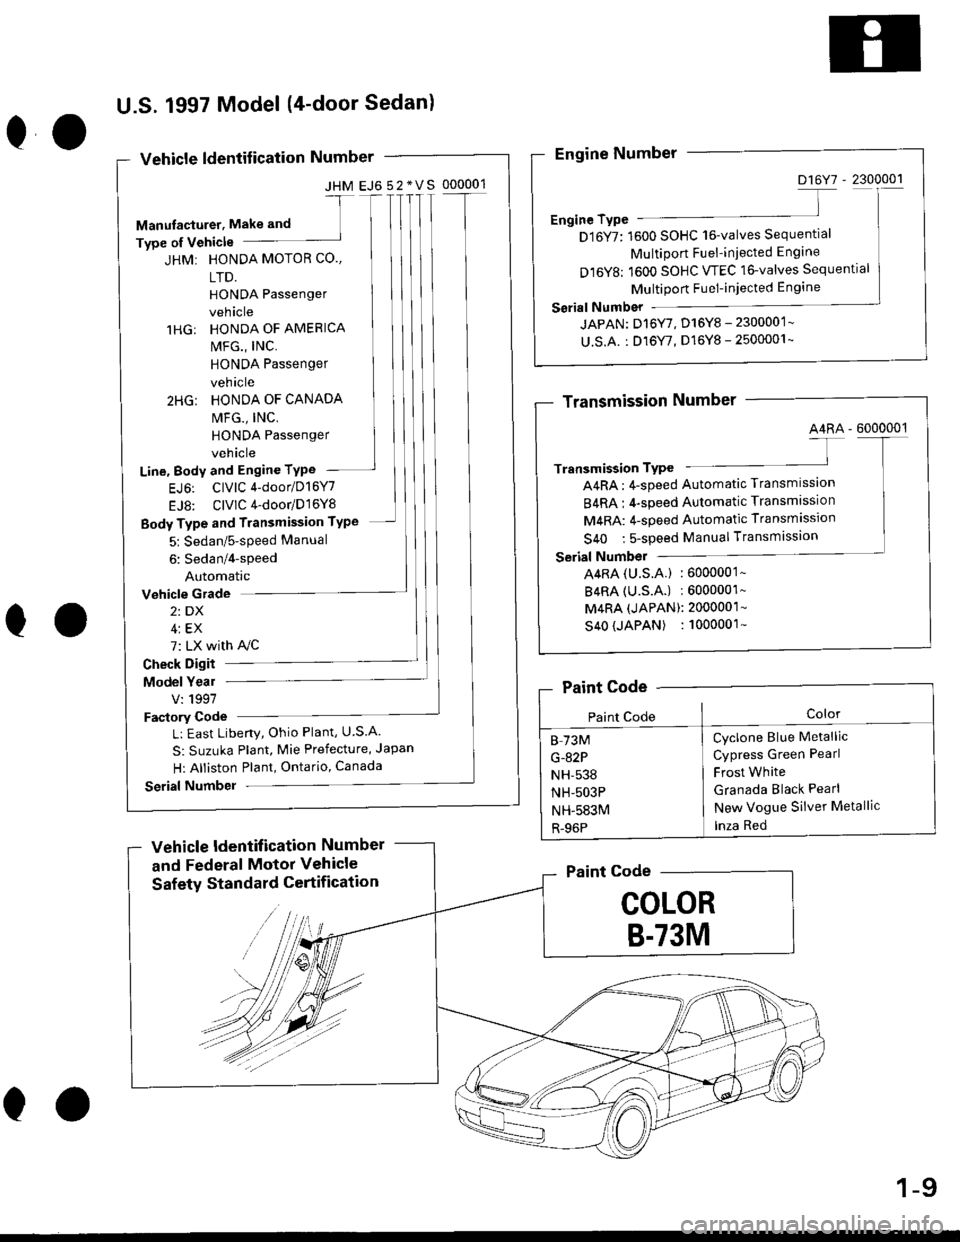 HONDA CIVIC 2000 6.G Workshop Manual 00
U.S. 1997 Model (4-door Sedanl
Vehicle ldentif ication Number
JHM EJ6 52*VS 000001
Manulaqturer. Make and 
-t
Type of Vehicle
HONDA MOTOR CO.,
LTD.
HONDA Passenger
vehicle
HONDA OF AMERICA
MFG., IN